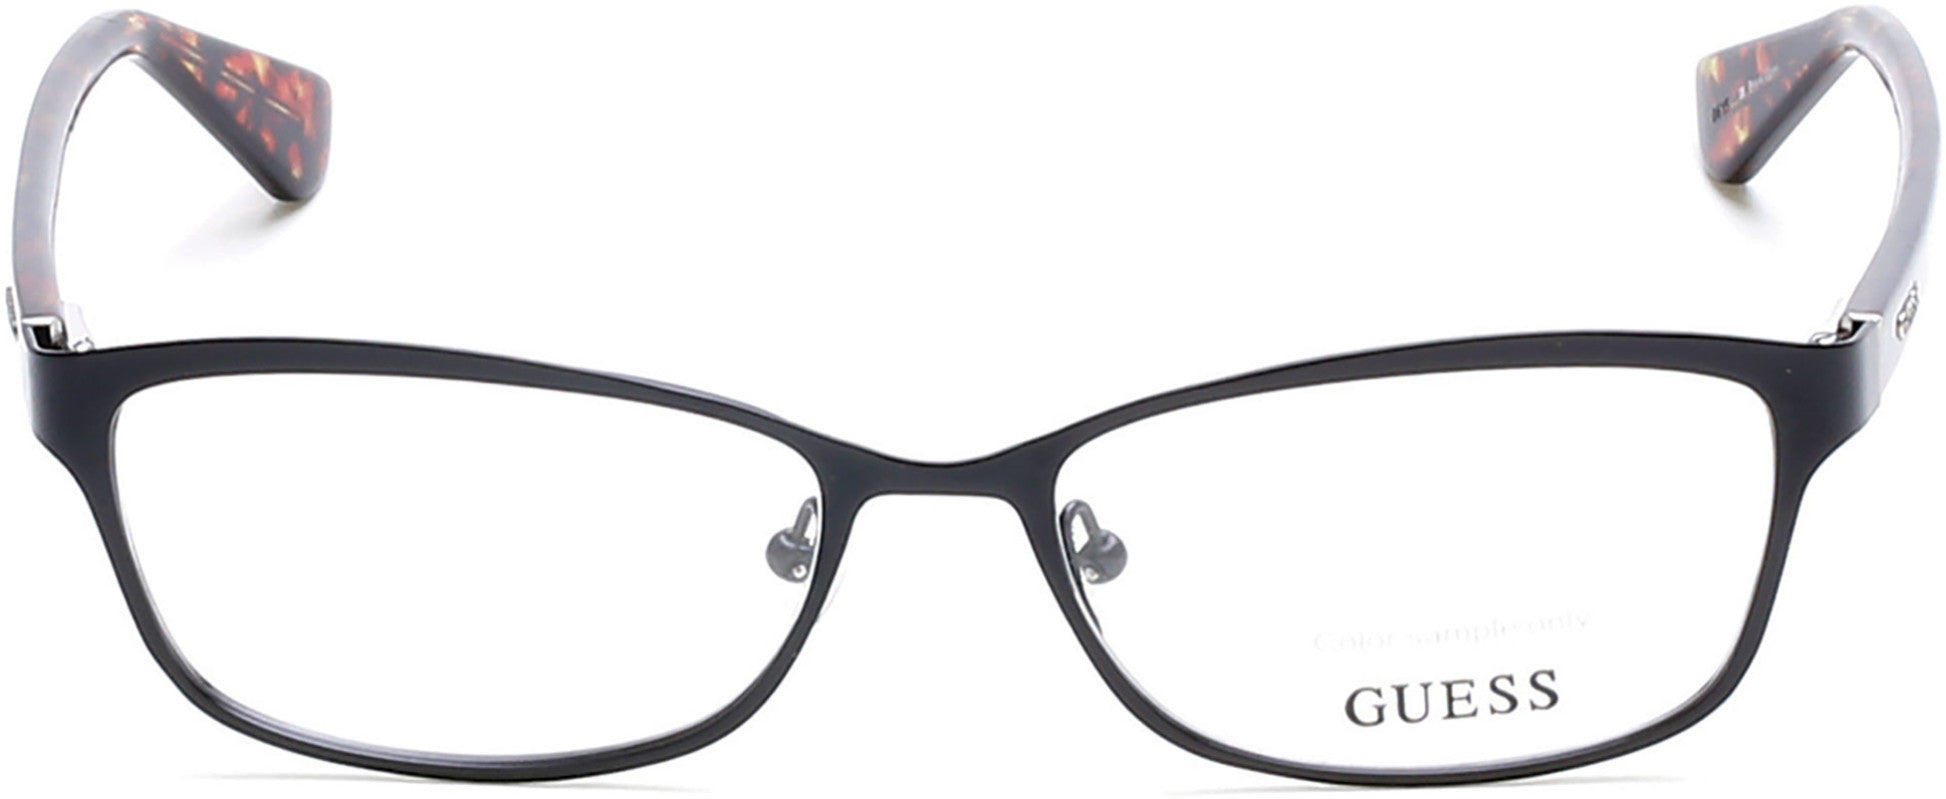 Guess GU2548 Geometric Eyeglasses 002-002 - Matte Black